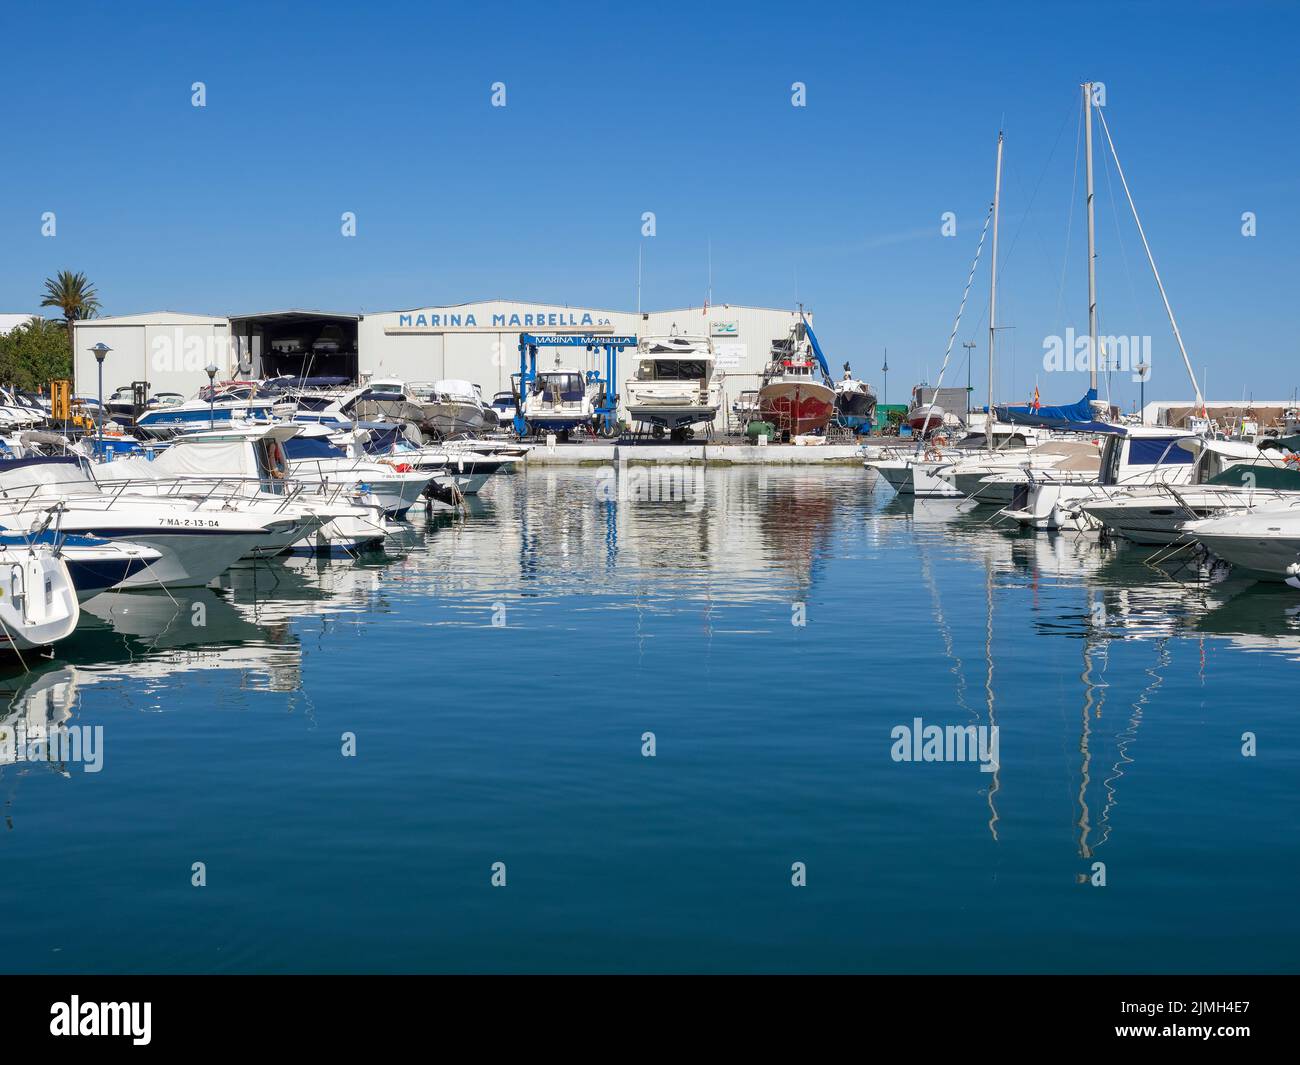 MARBELLA, ANDALUCIA/ESPAÑA - 4 DE MAYO : Barcos en el puerto deportivo de Marbella España el 4 de mayo de 2014 Foto de stock